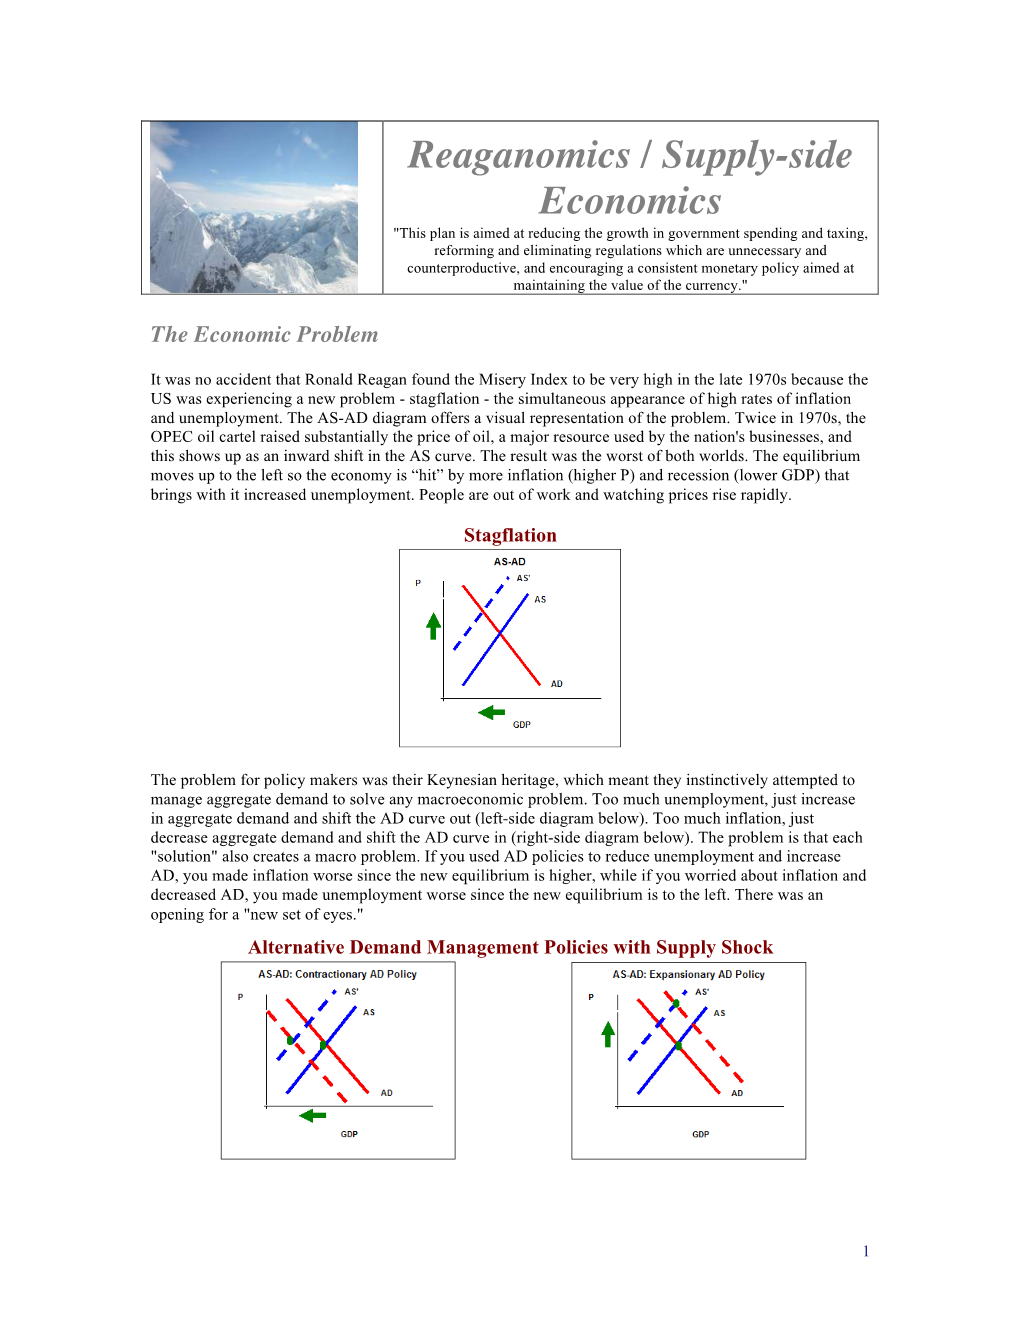 Reaganomics / Supply-Side Economics